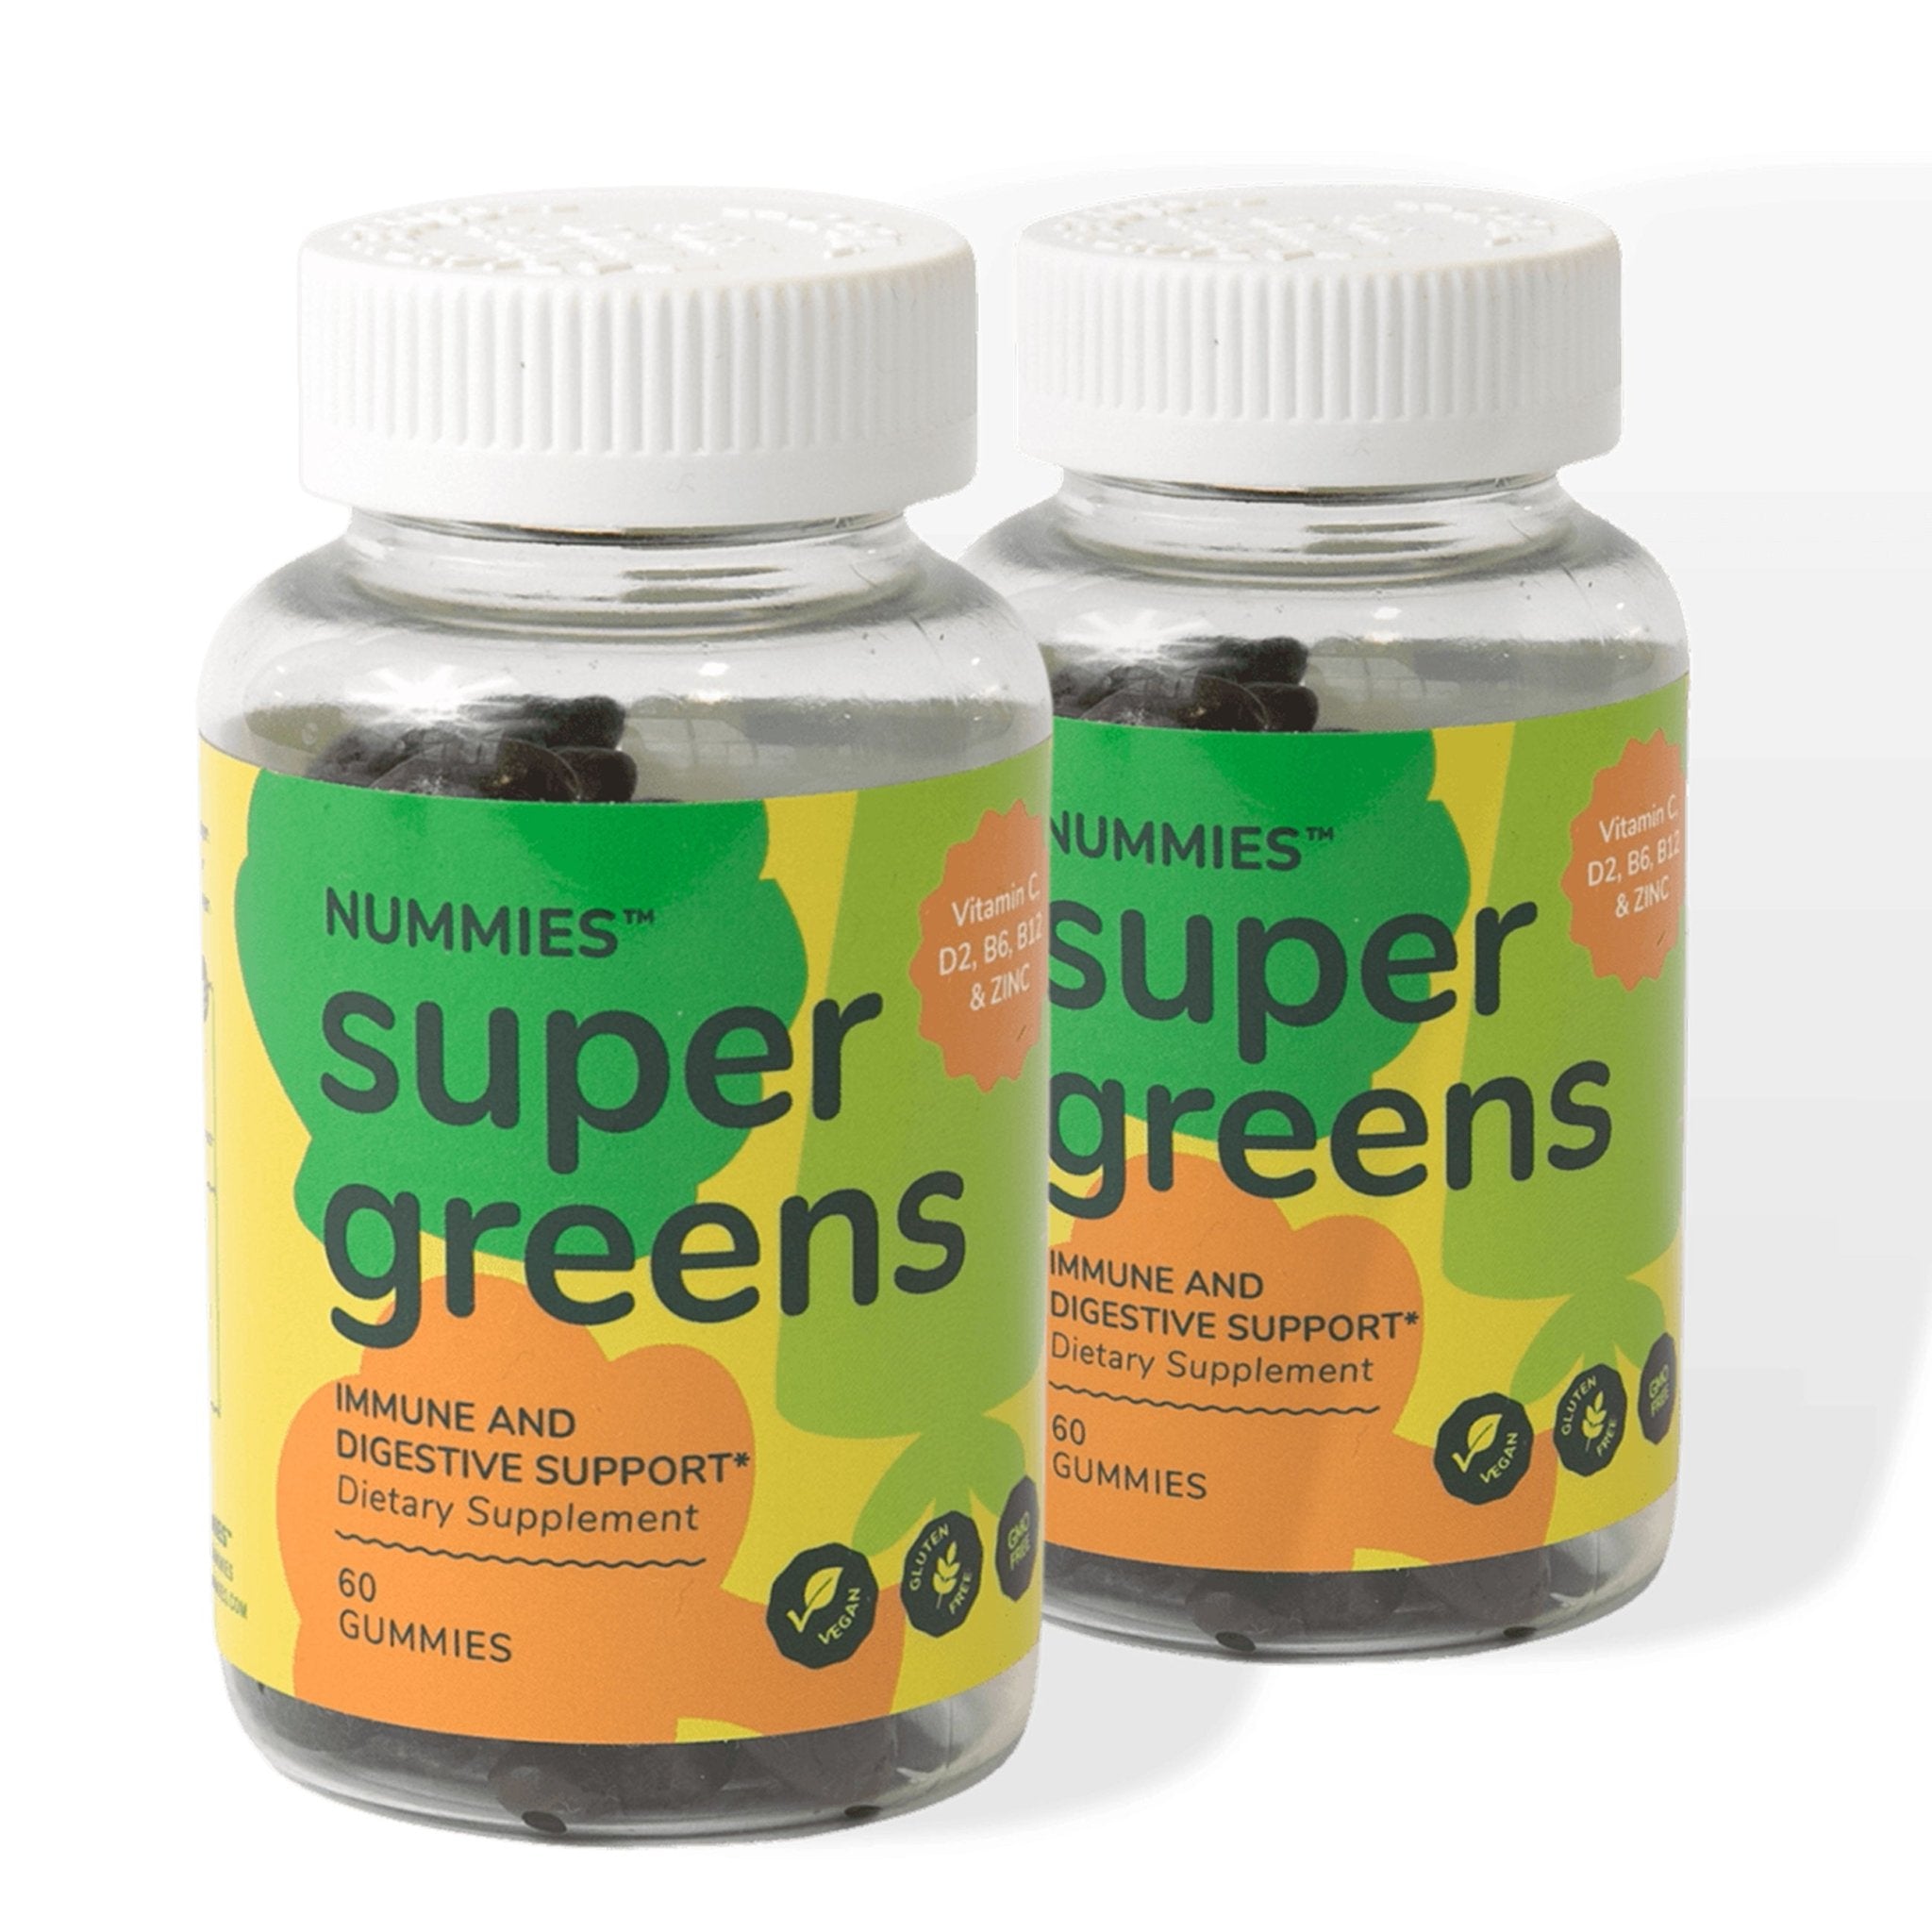 Supergreens Health Pack - Nummies